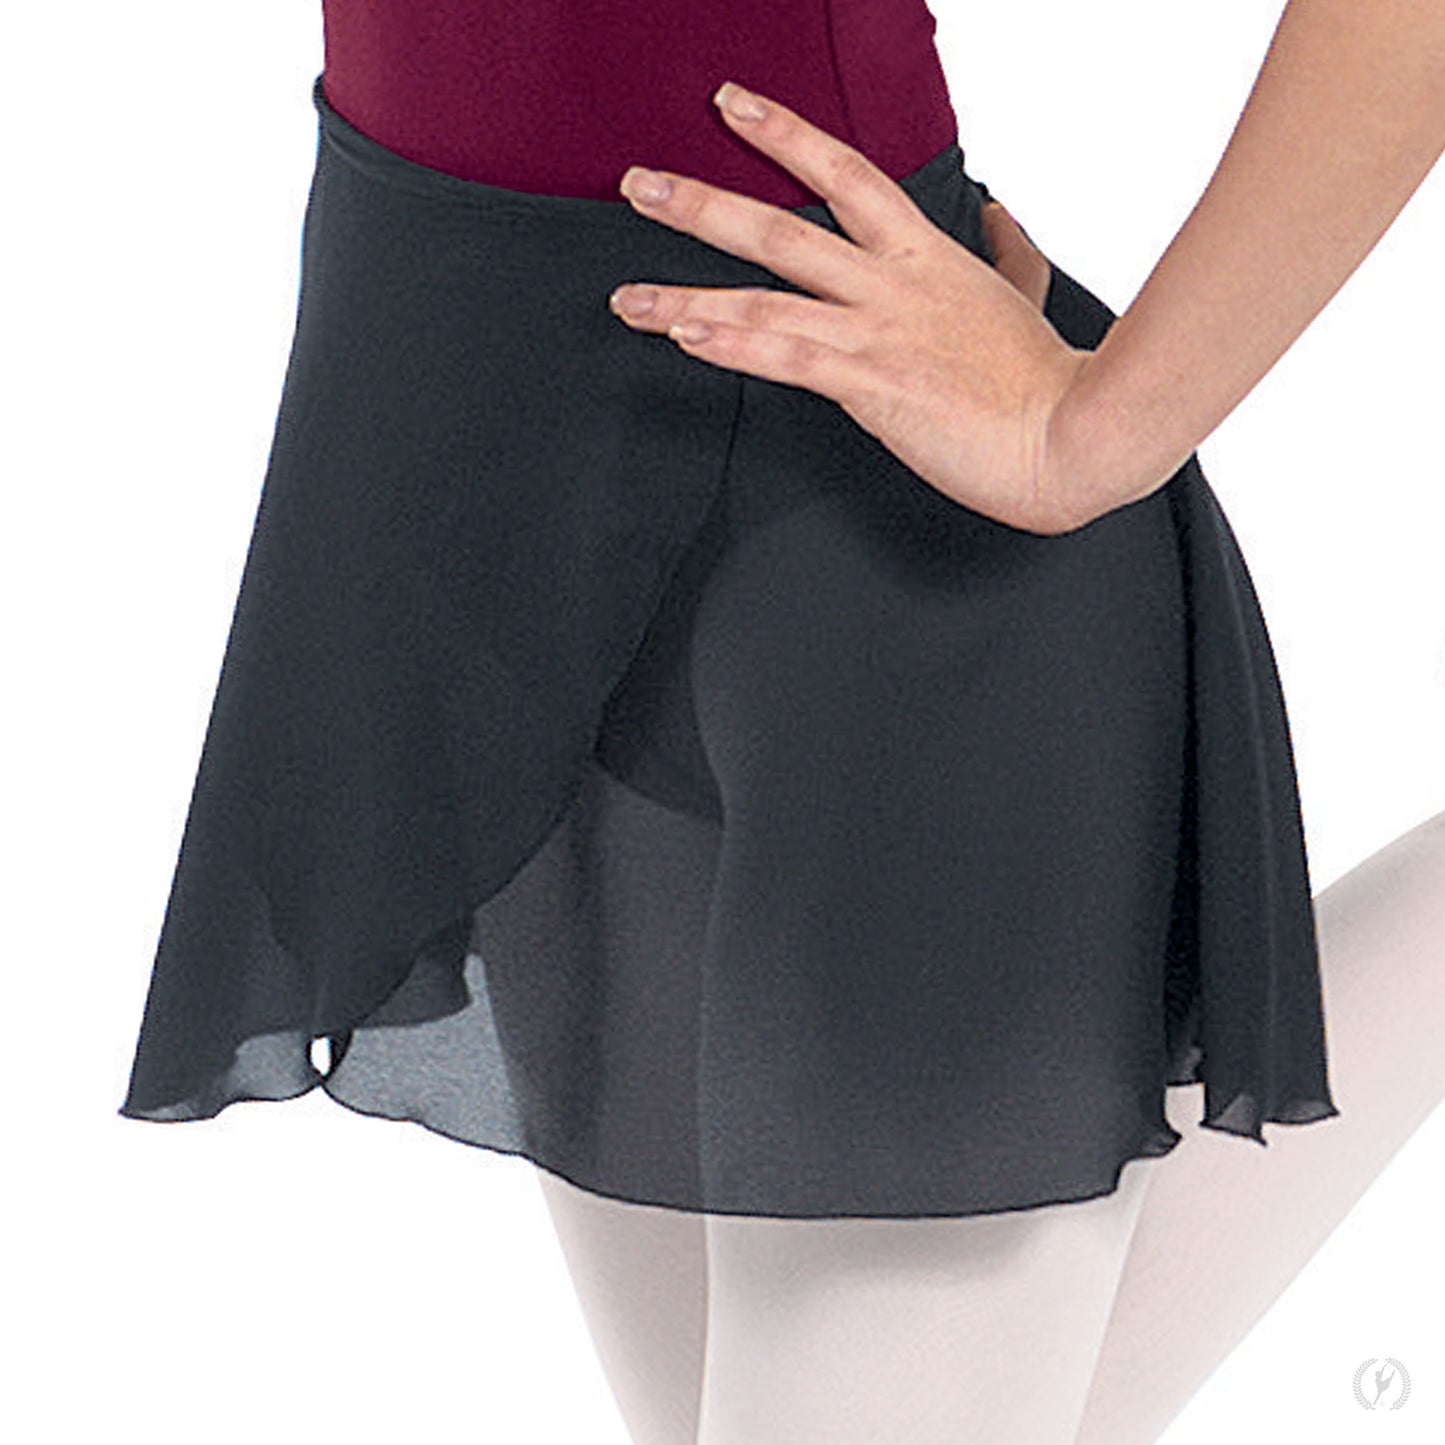 Women's Plus Size Wrap Skirt - 10362P